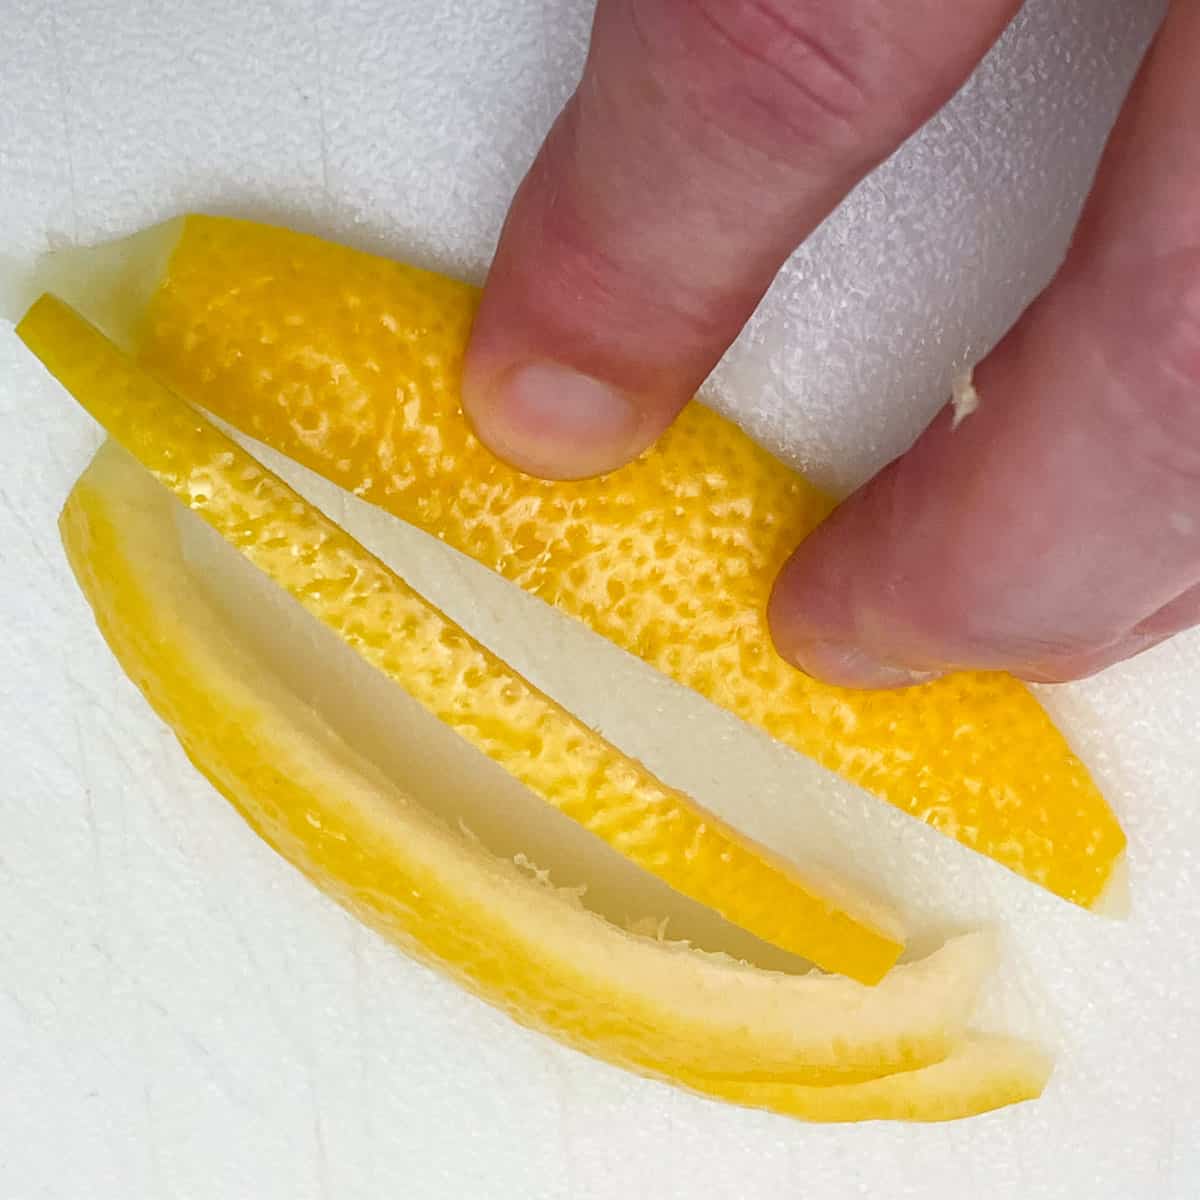 Cutting lemon peel into ¼ inch strips.